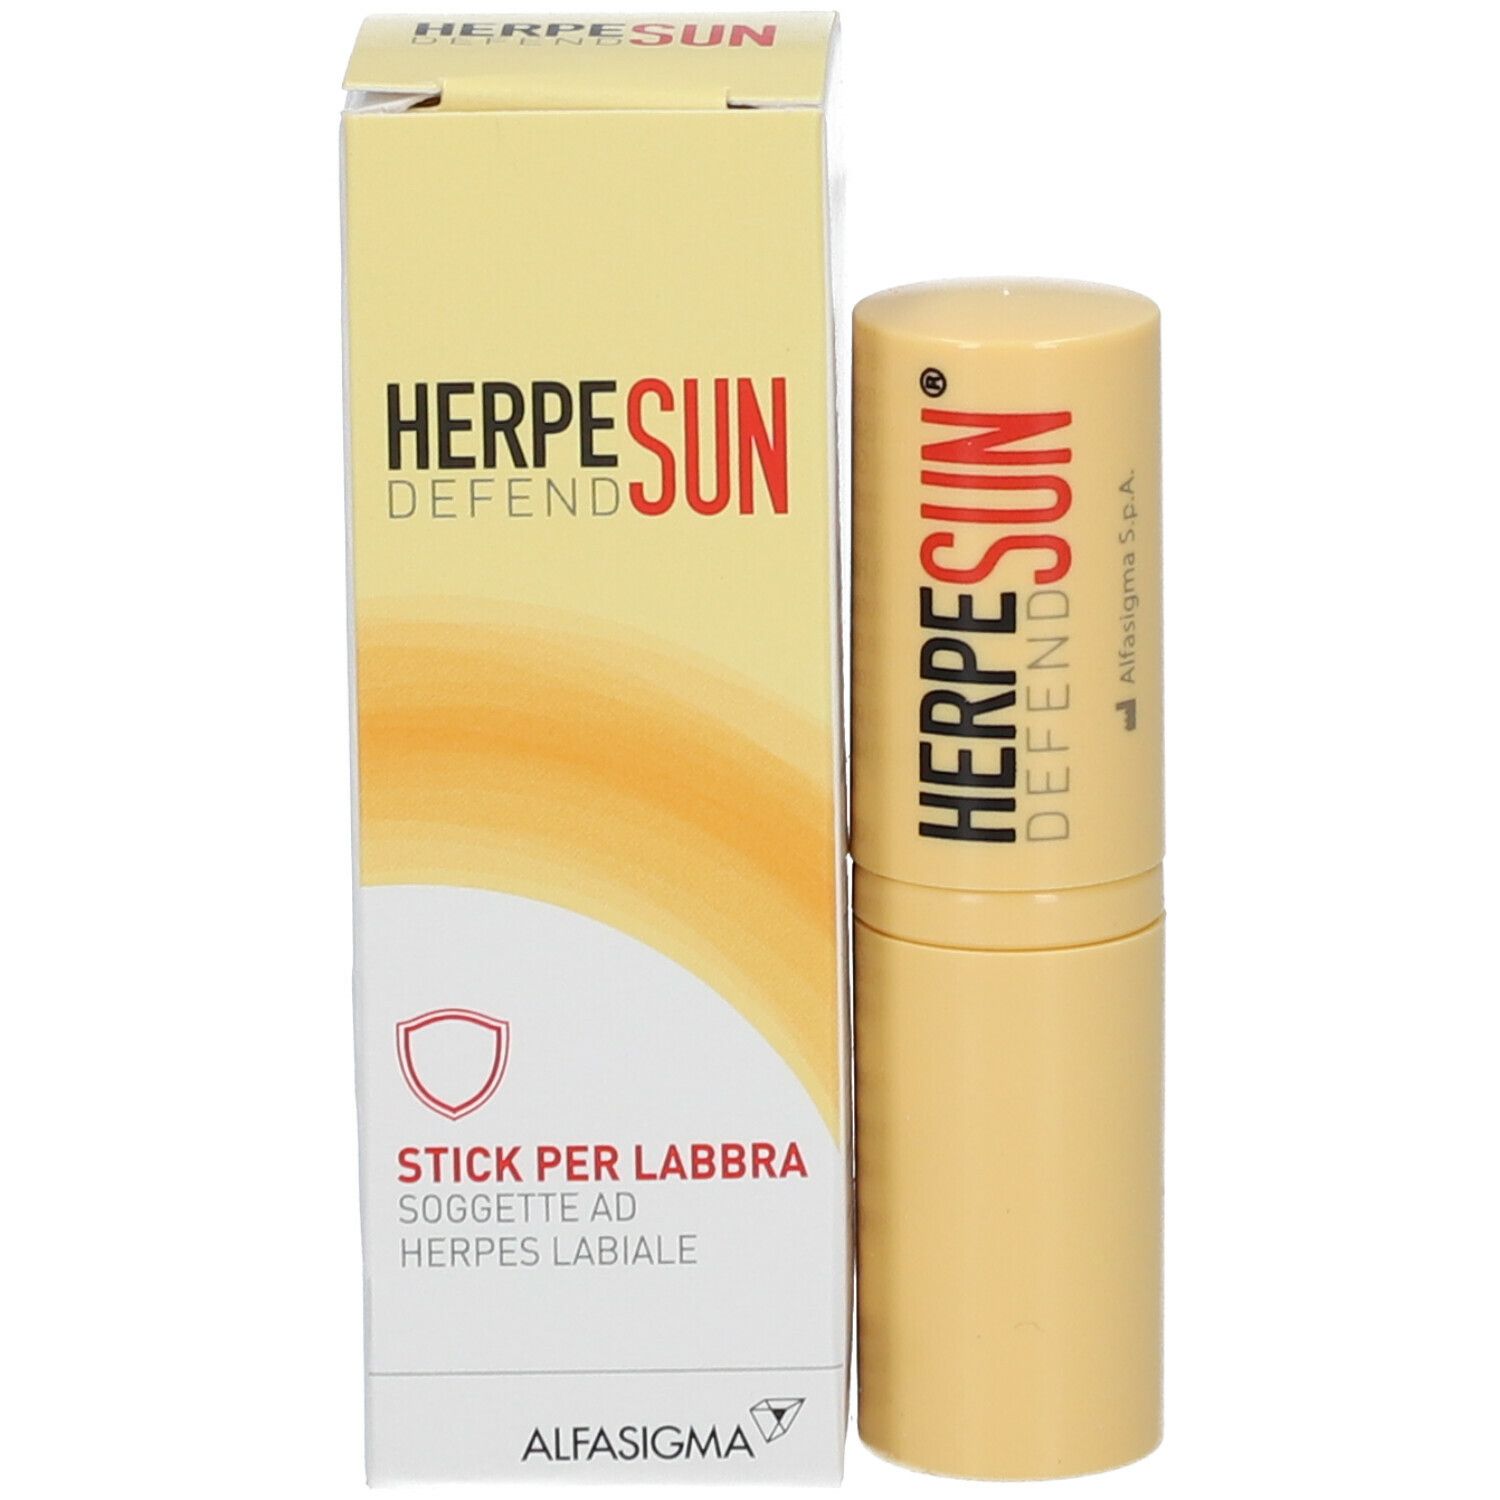 HERPE SUN® Defend Stick per labbra